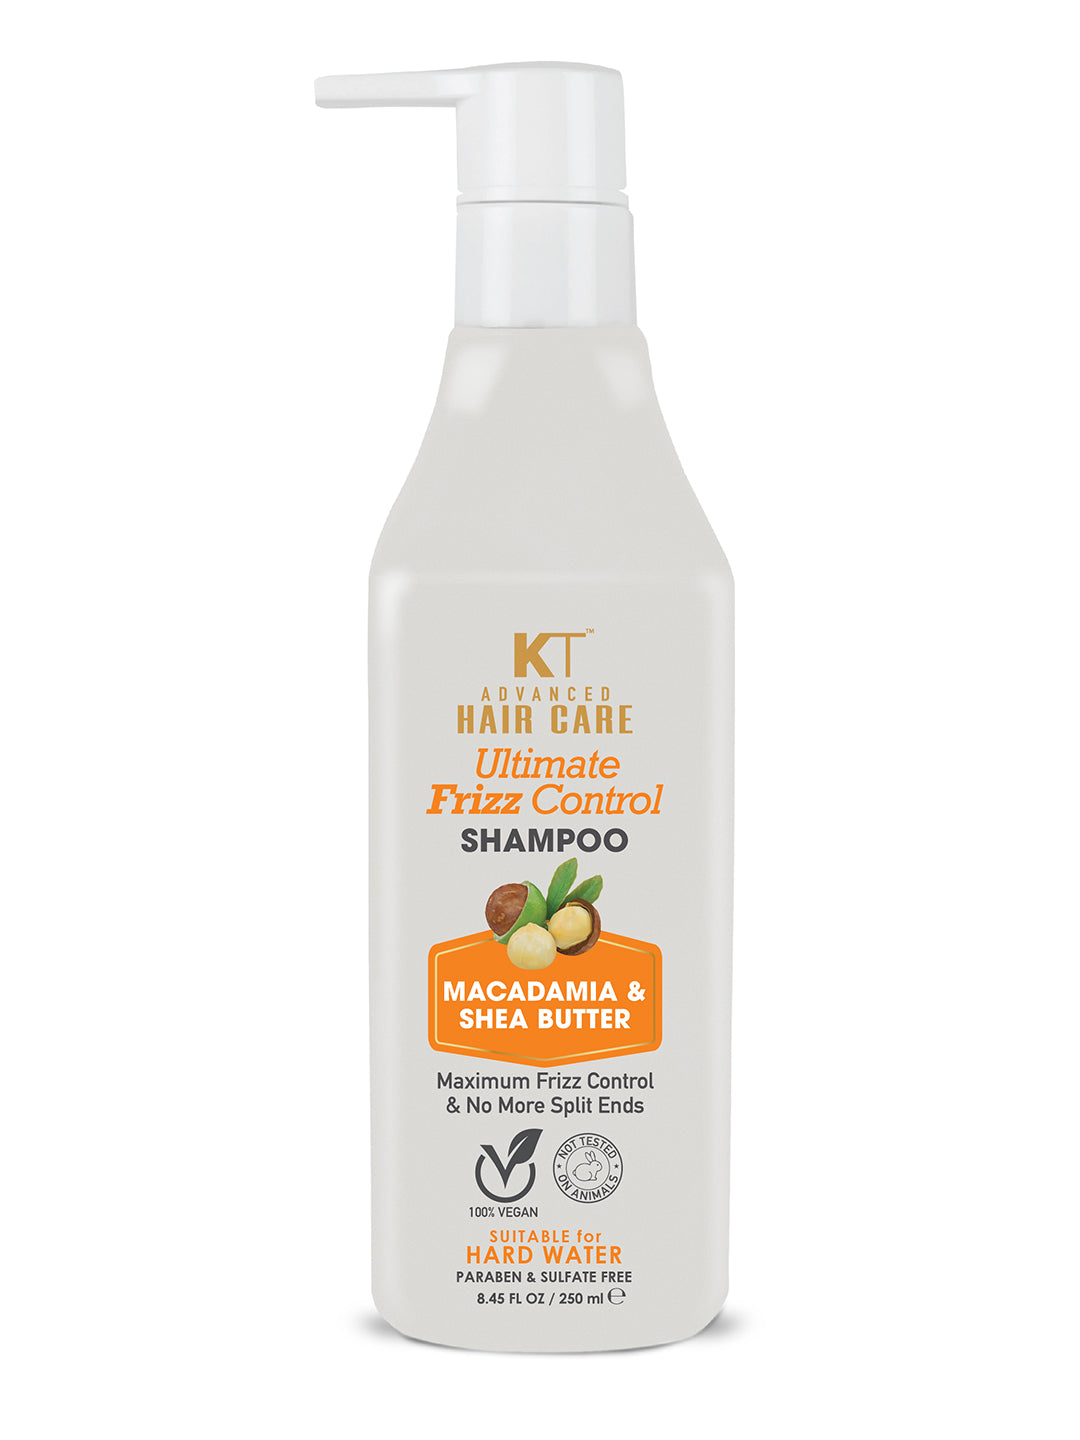 KT Professional Advanced Hair Care Ultimate Frizz Control Shampoo- 250 ml